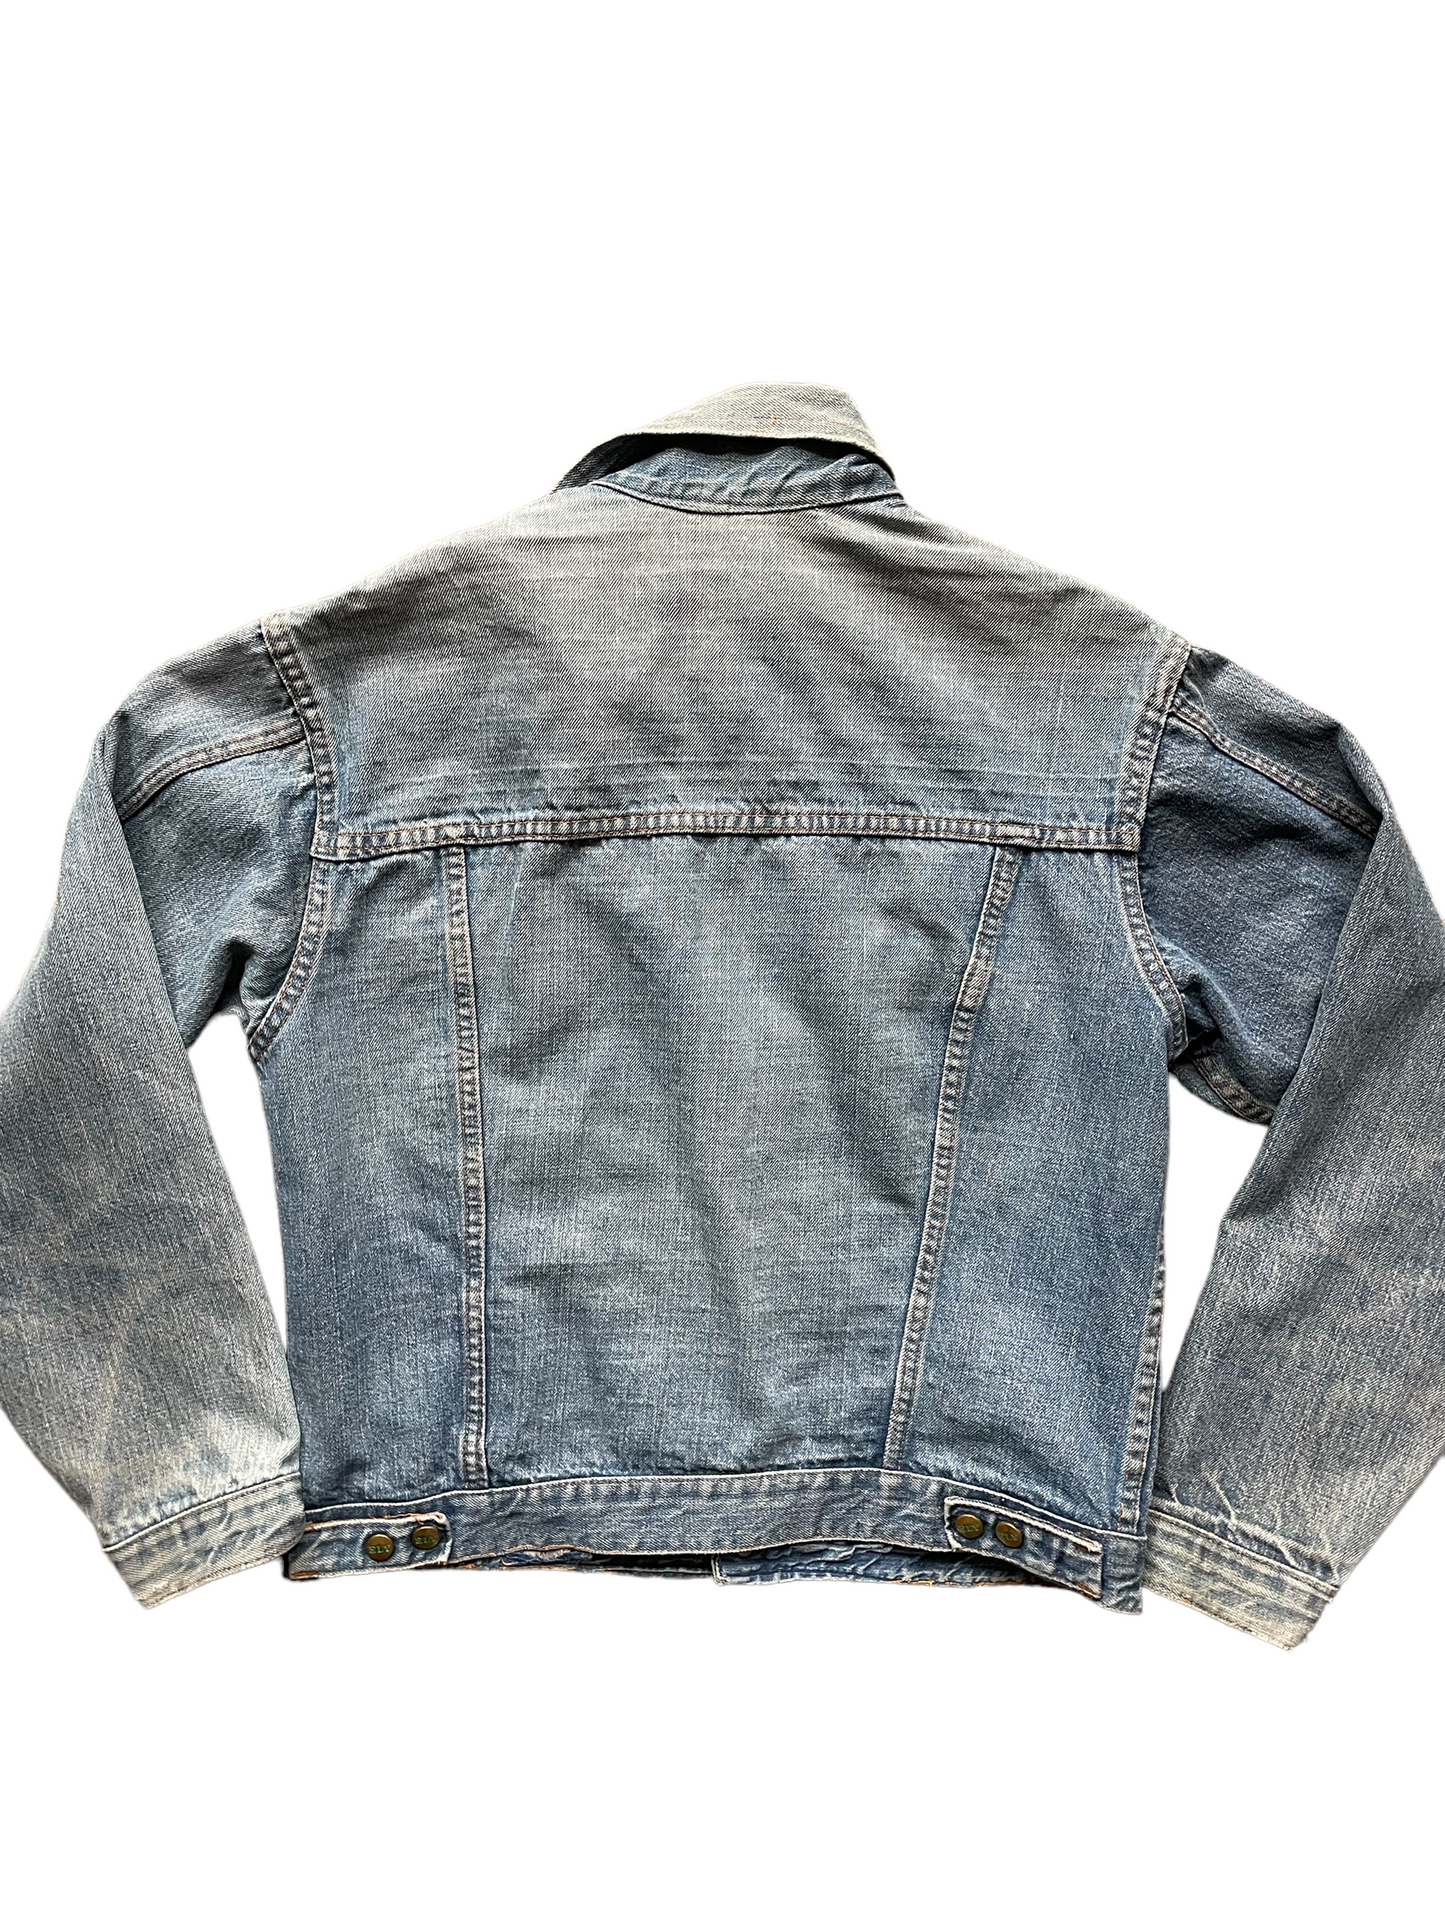 Full back view Vintage 60's Type 2 Pleated Ely Denim Jacket SZ Med | Barn Owl Vintage| Seattle True Vintage